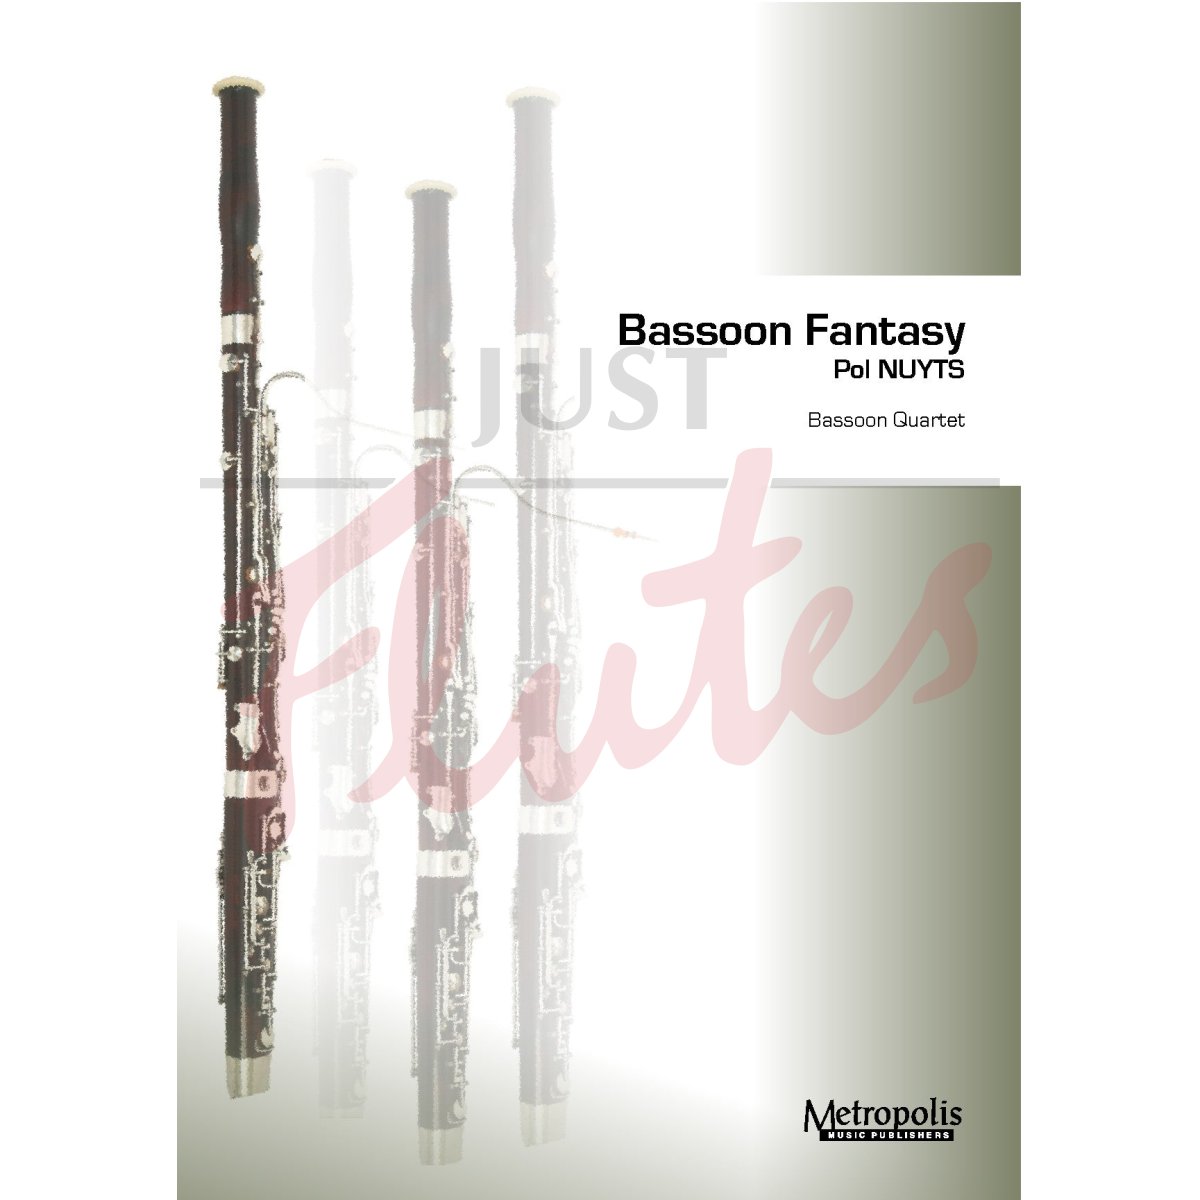 Bassoon Fantasy for Bassoon Quartet